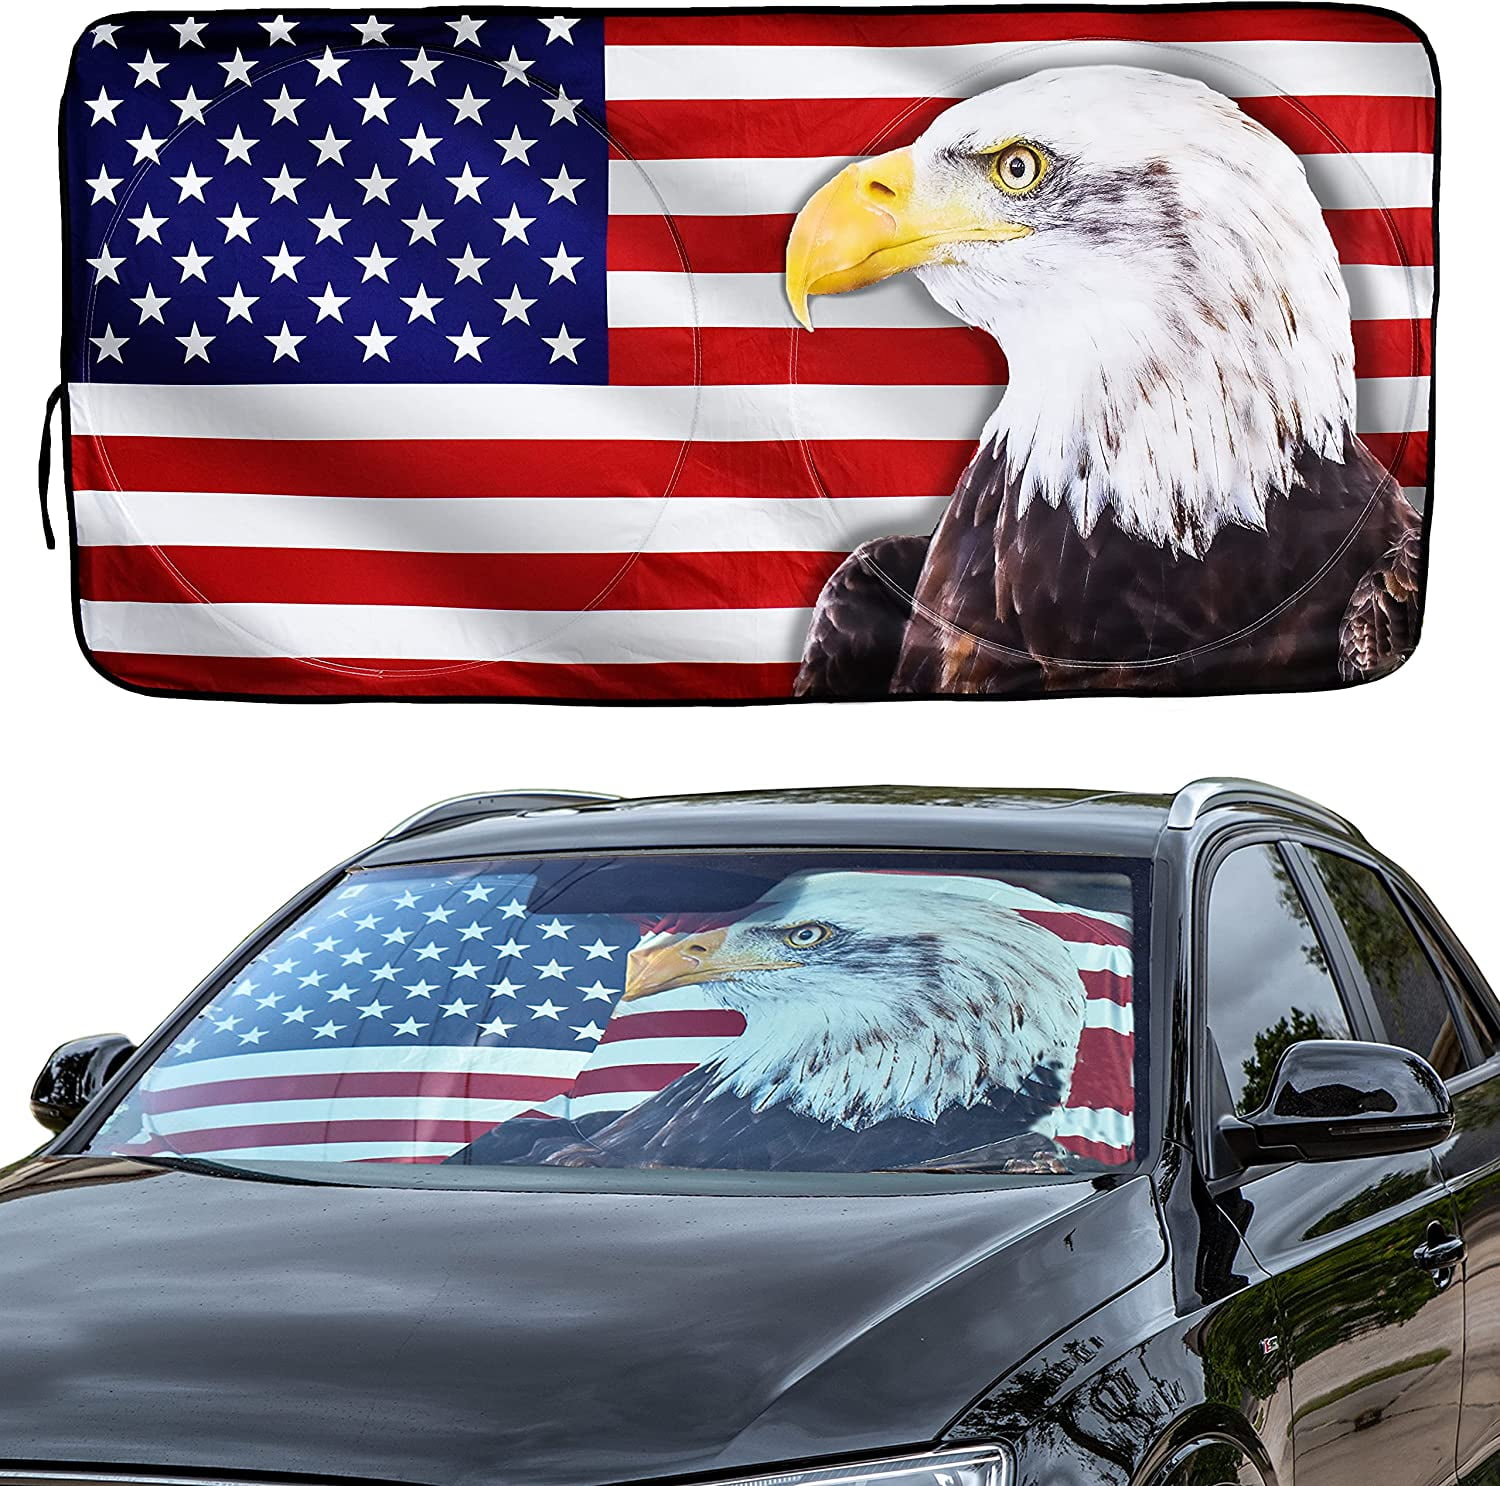 Kraco Suncutters American Flag Design Car Side Window Shade 